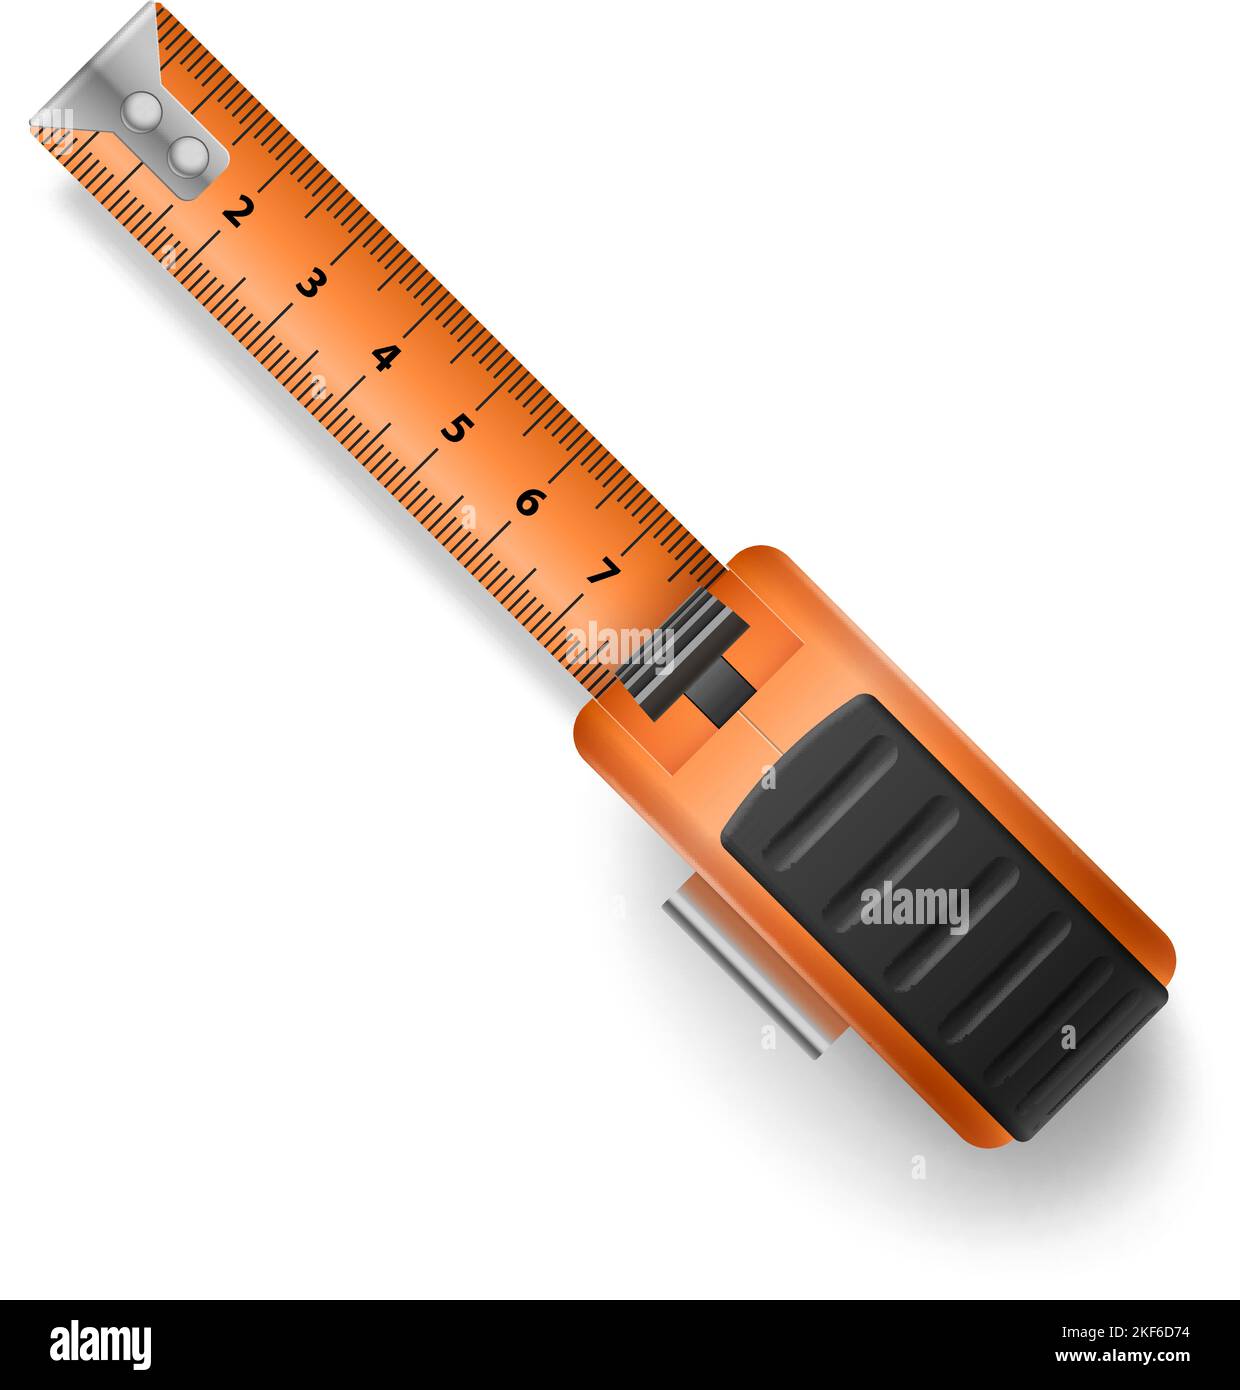 https://c8.alamy.com/comp/2KF6D74/open-orange-tape-measure-centimeter-scale-over-white-background-2KF6D74.jpg